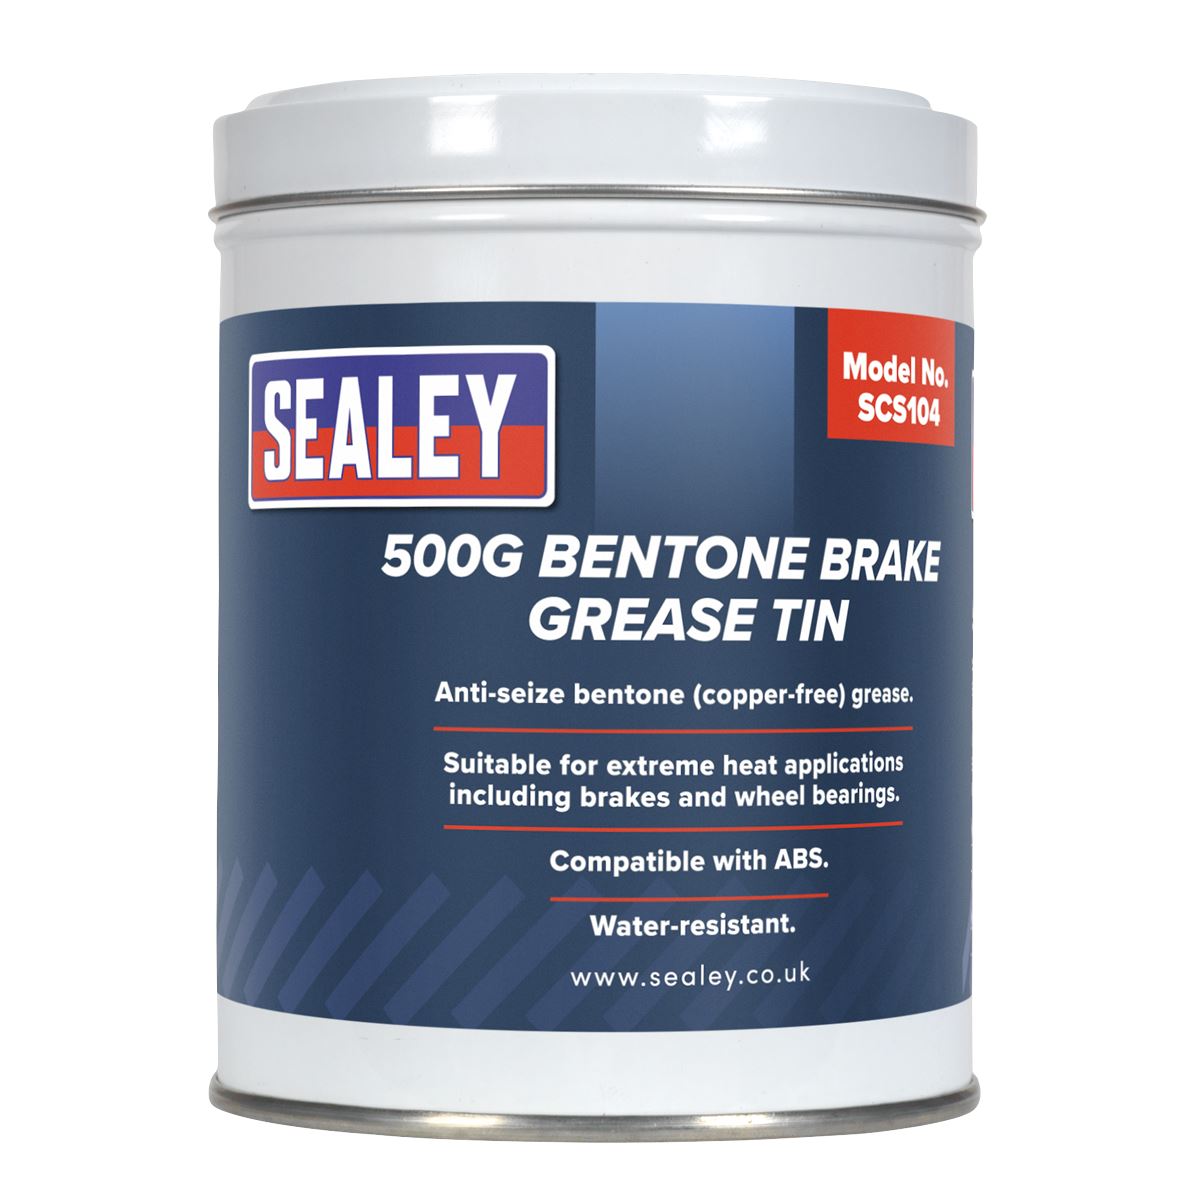 Sealey Bentone Grease for Brakes 500g Tin